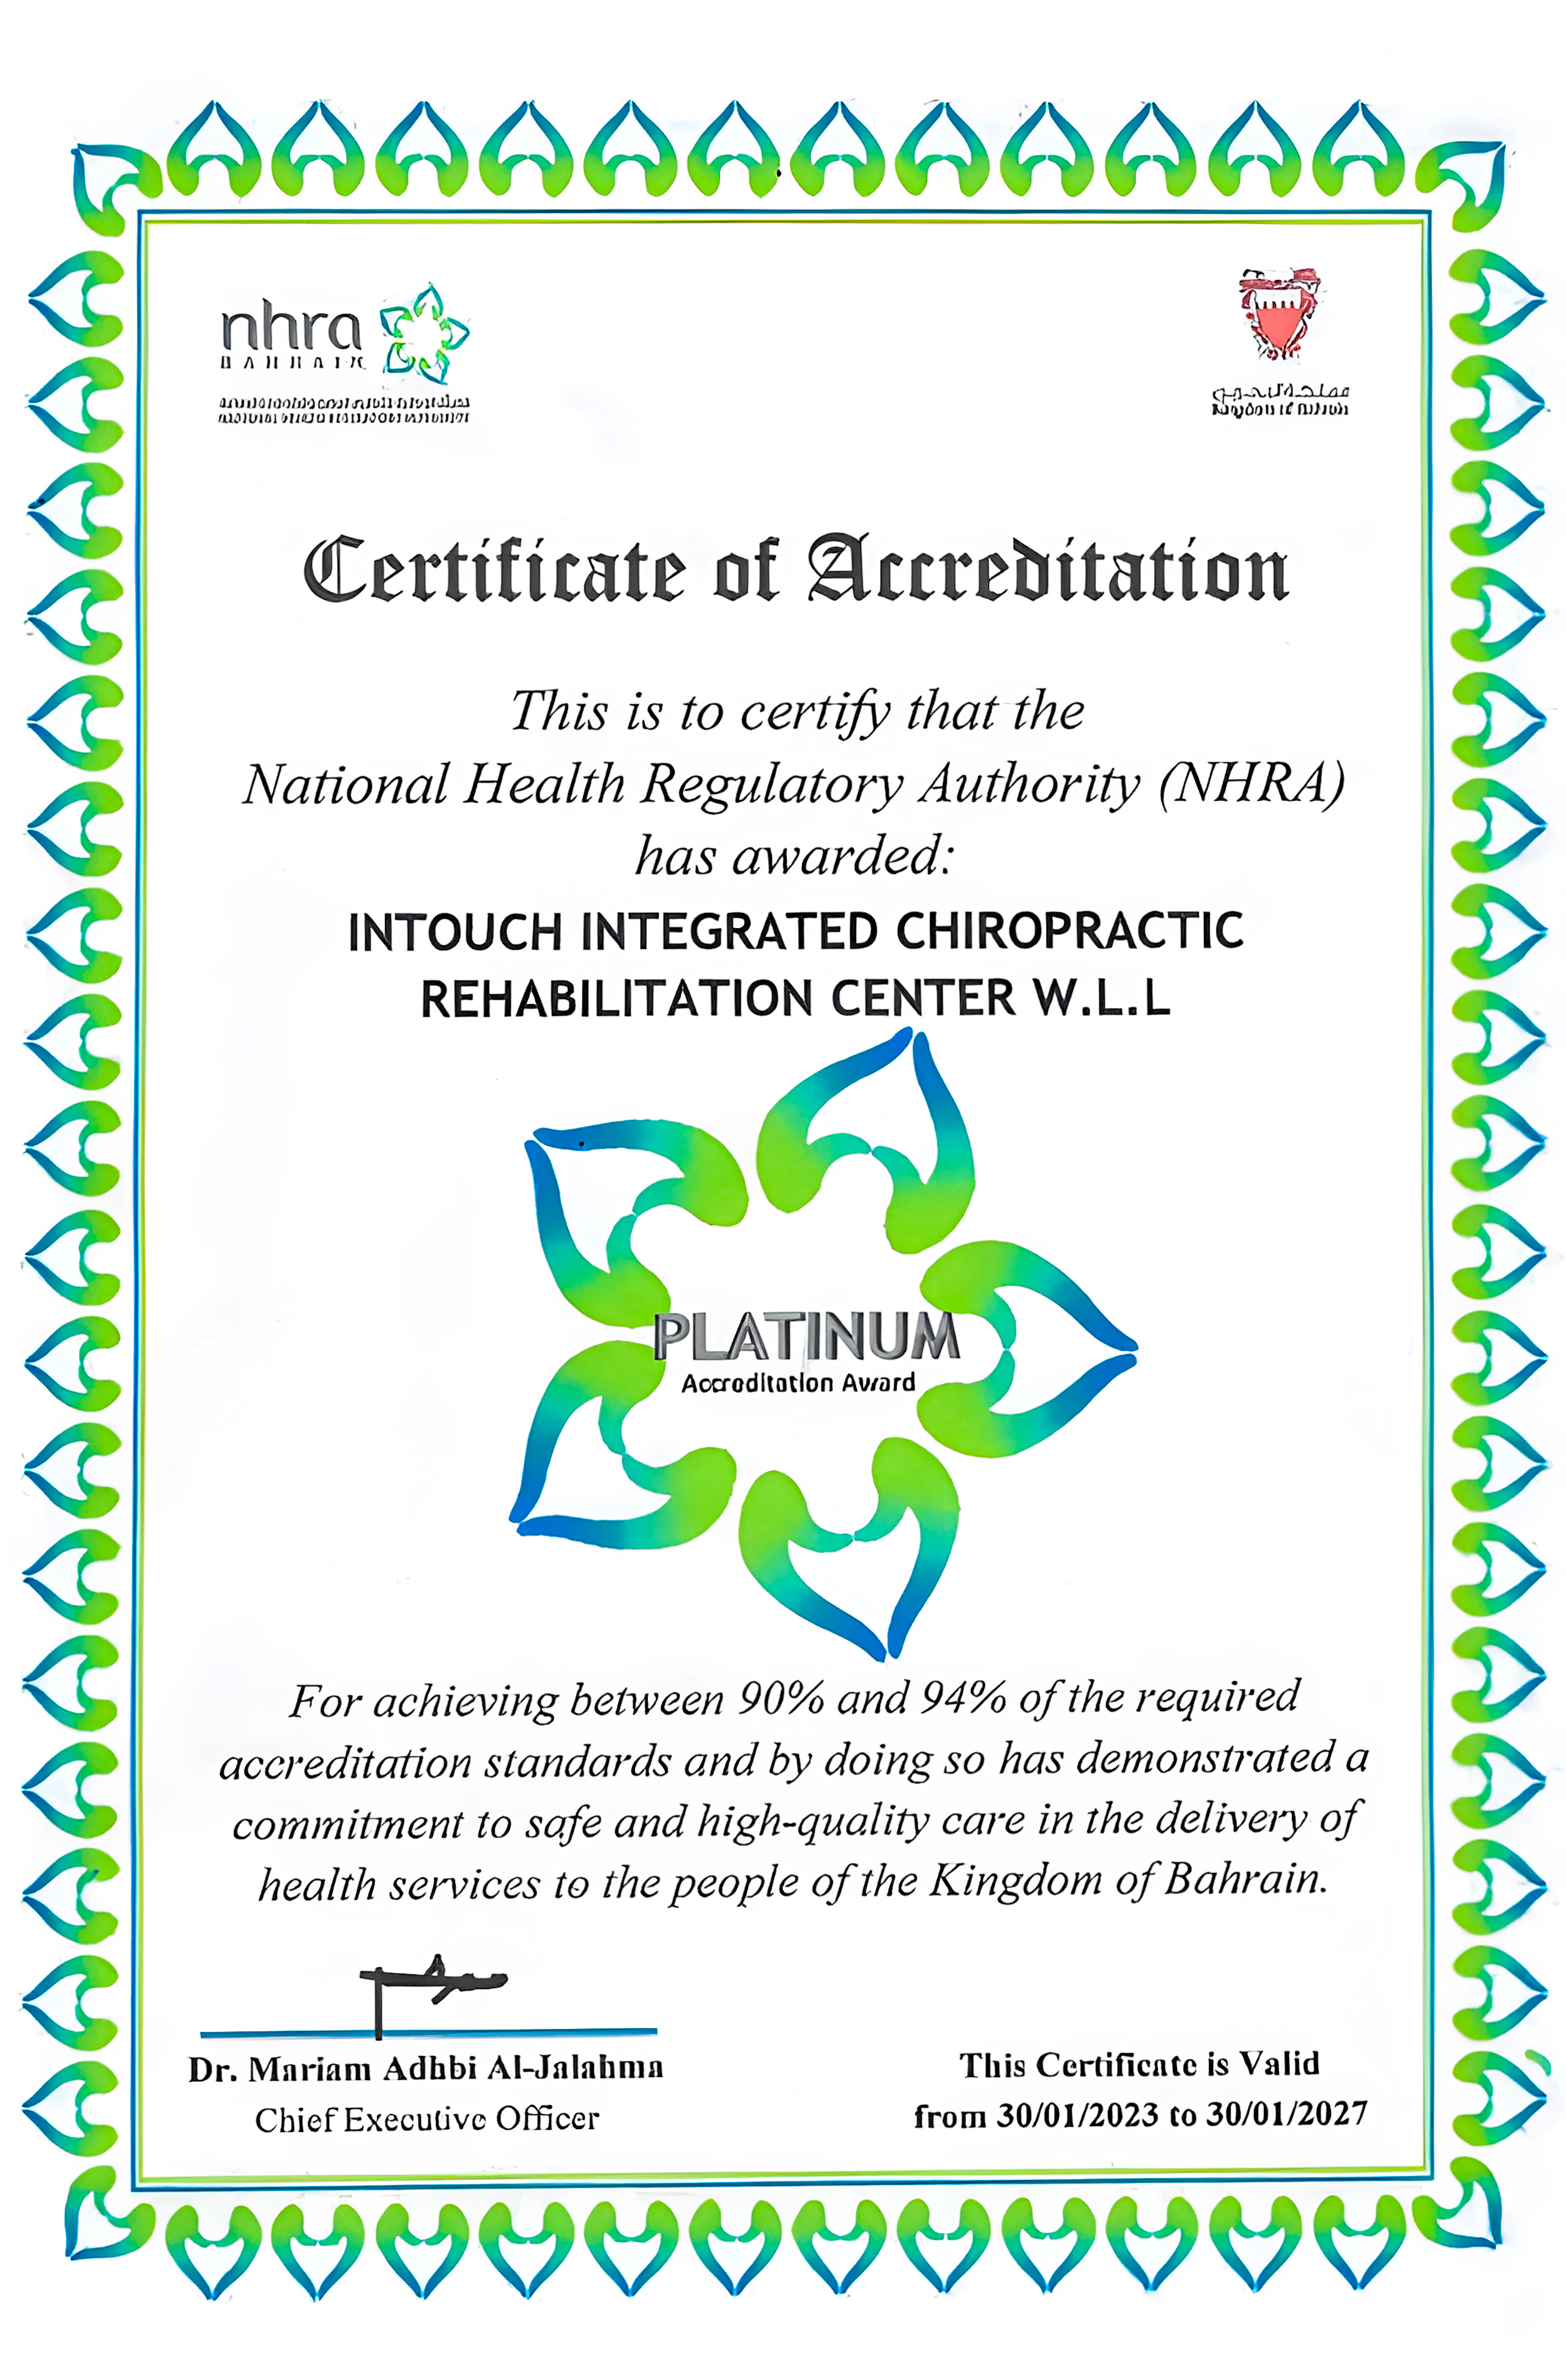 NHRA Accreditation Certificate